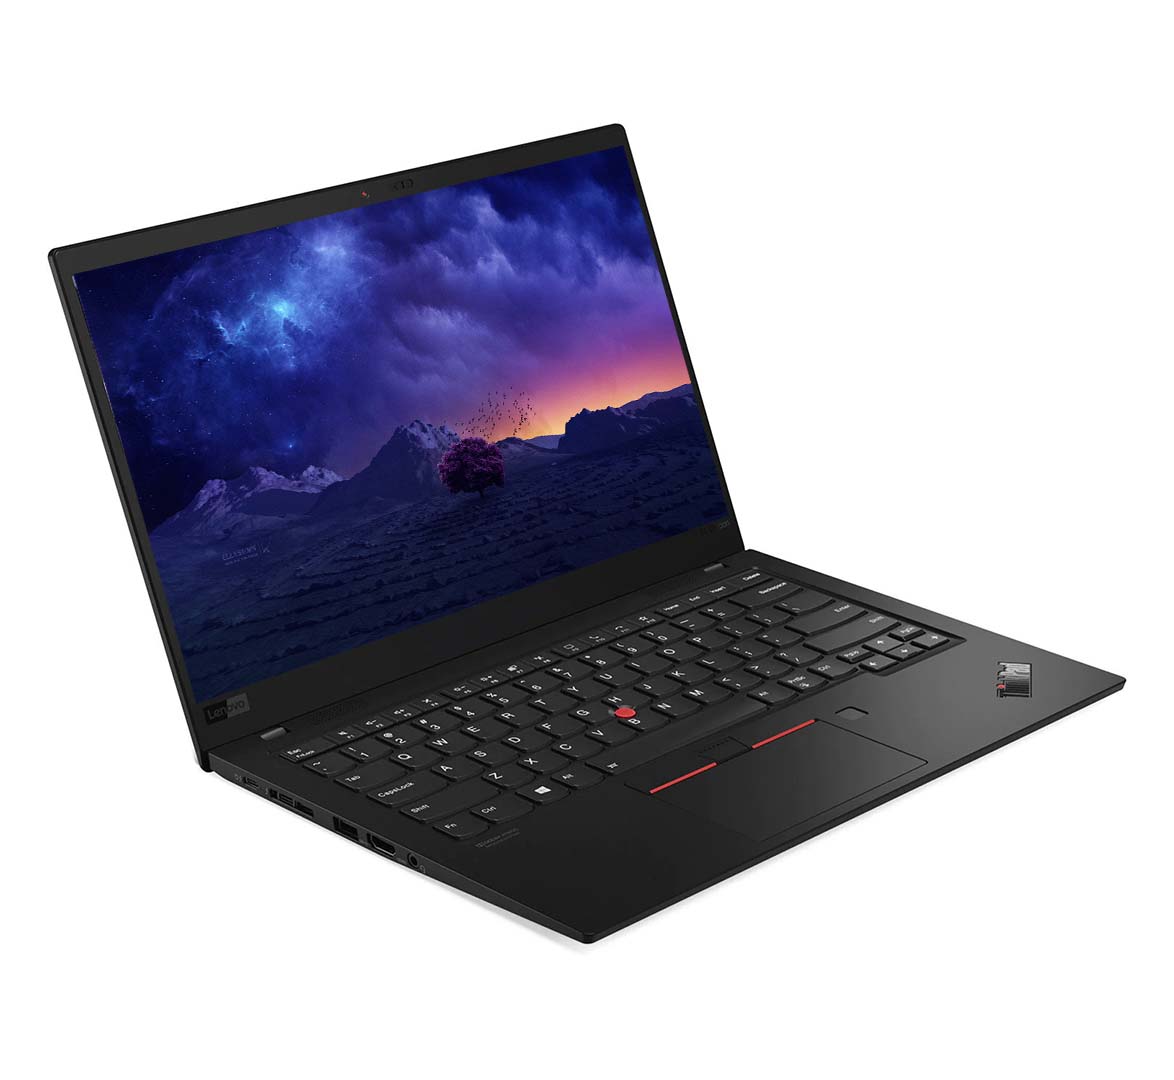 Lenovo ThinkPad X1 Carbon Business Laptop, Intel Core i5-5th Gen CPU, 8GB RAM, 256GB SSD, 14 inch Display, Windows 10, Refurbished Laptop